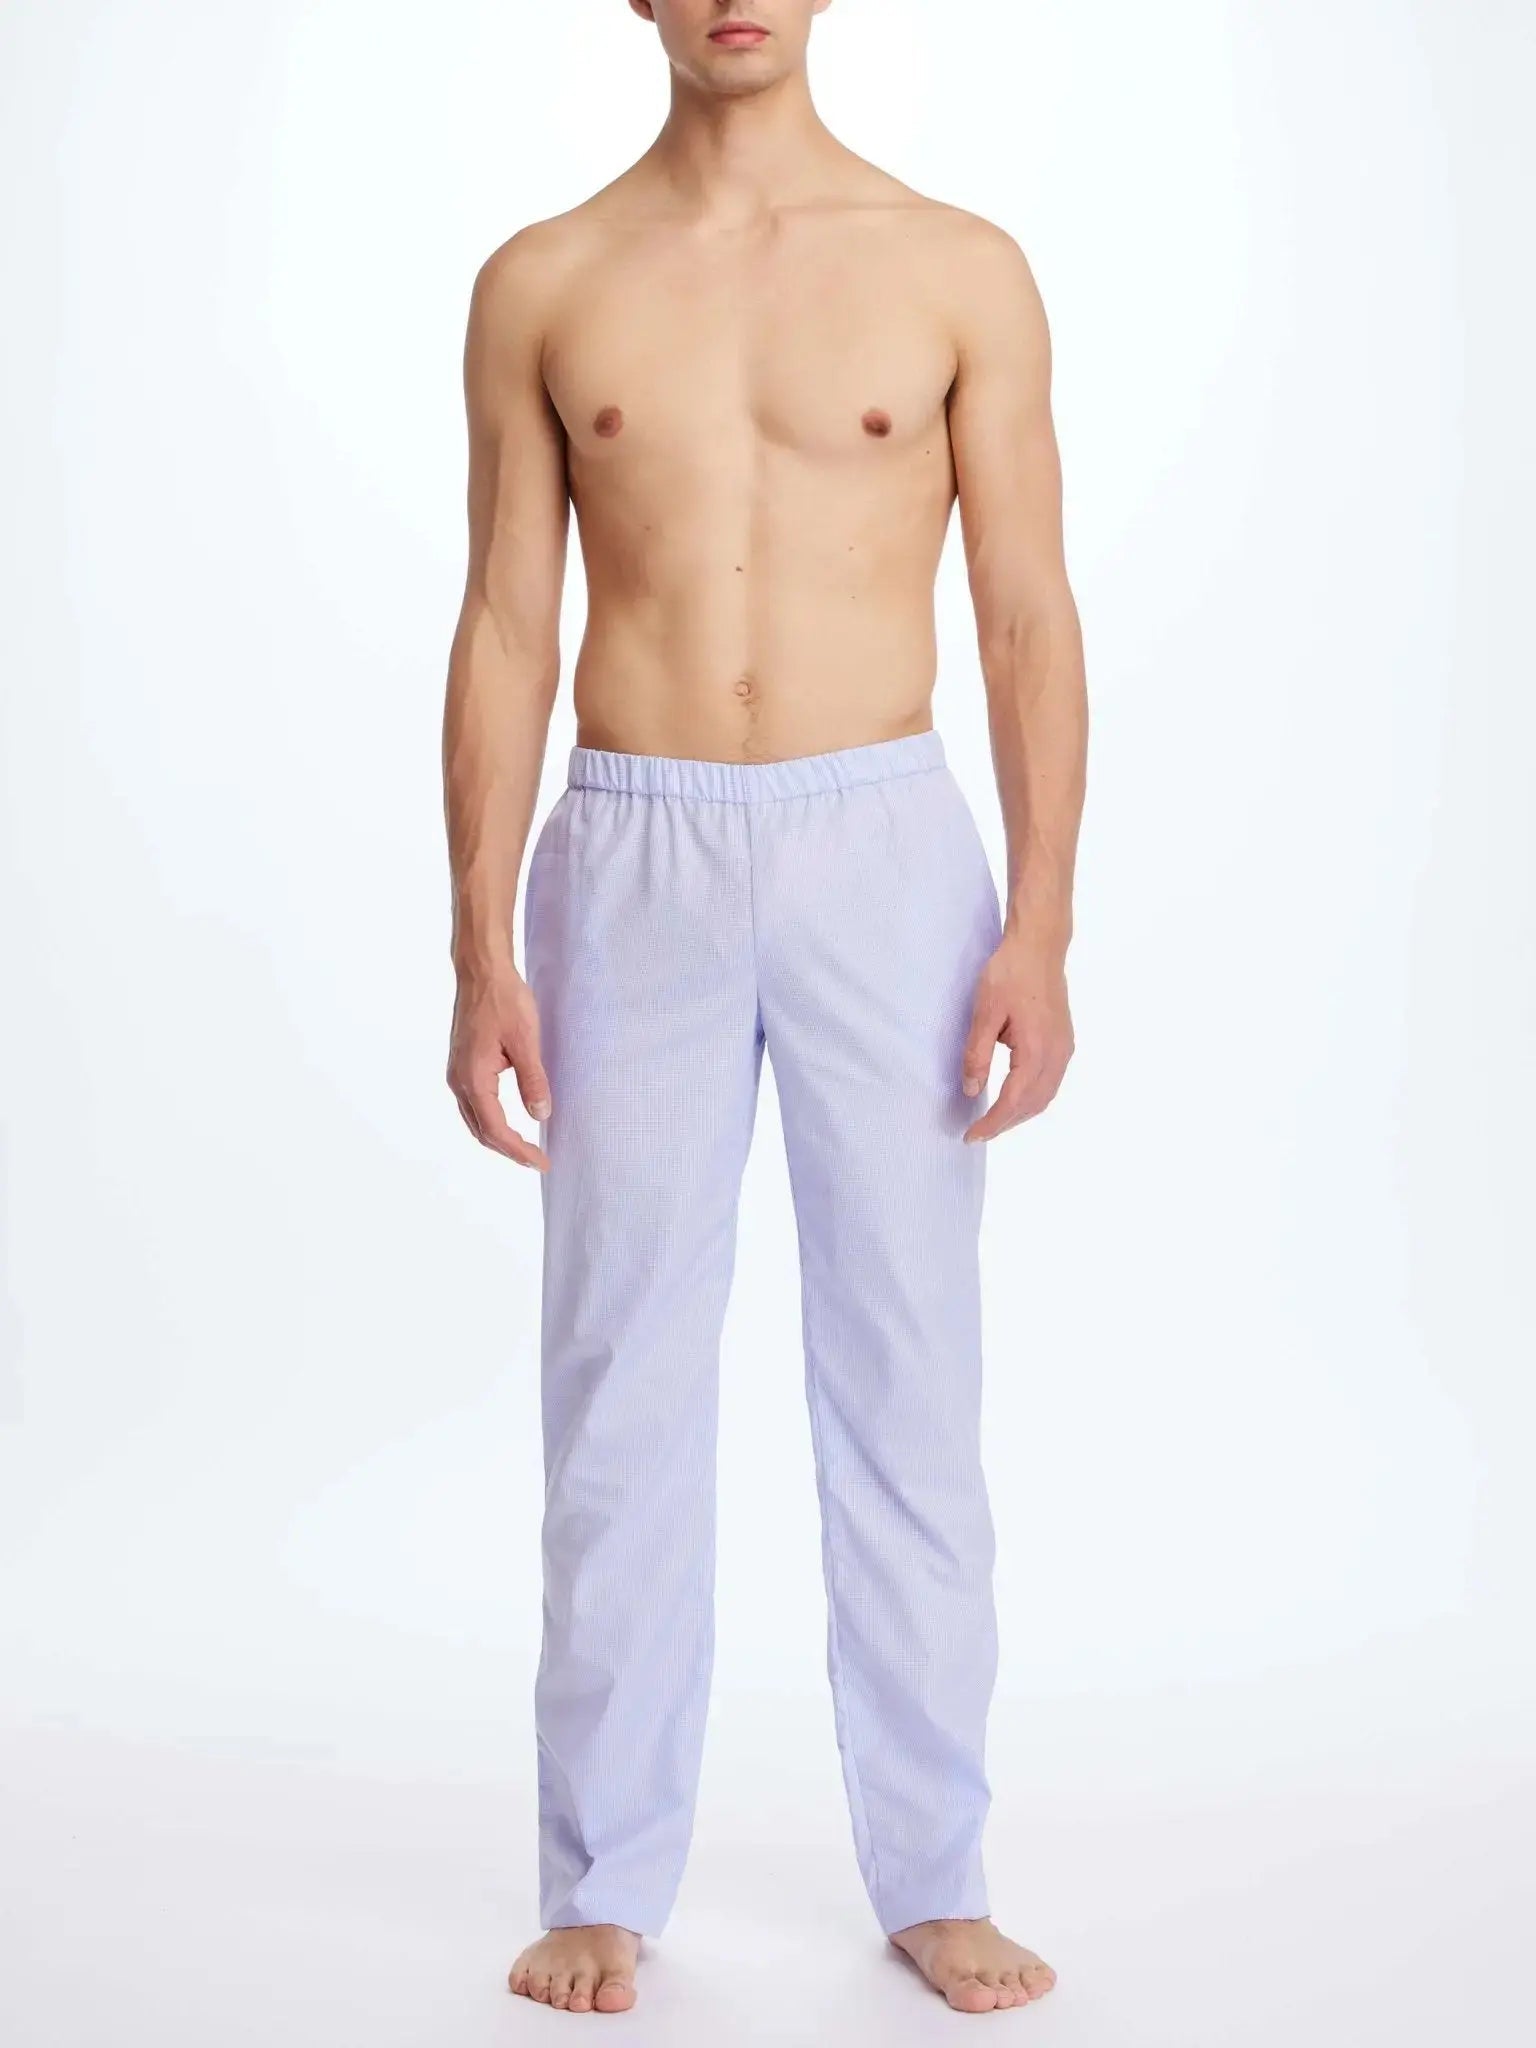 HiddenValor Big Boys Cotton Pajama Lounge Pants - Black/White, Large -  Walmart.com